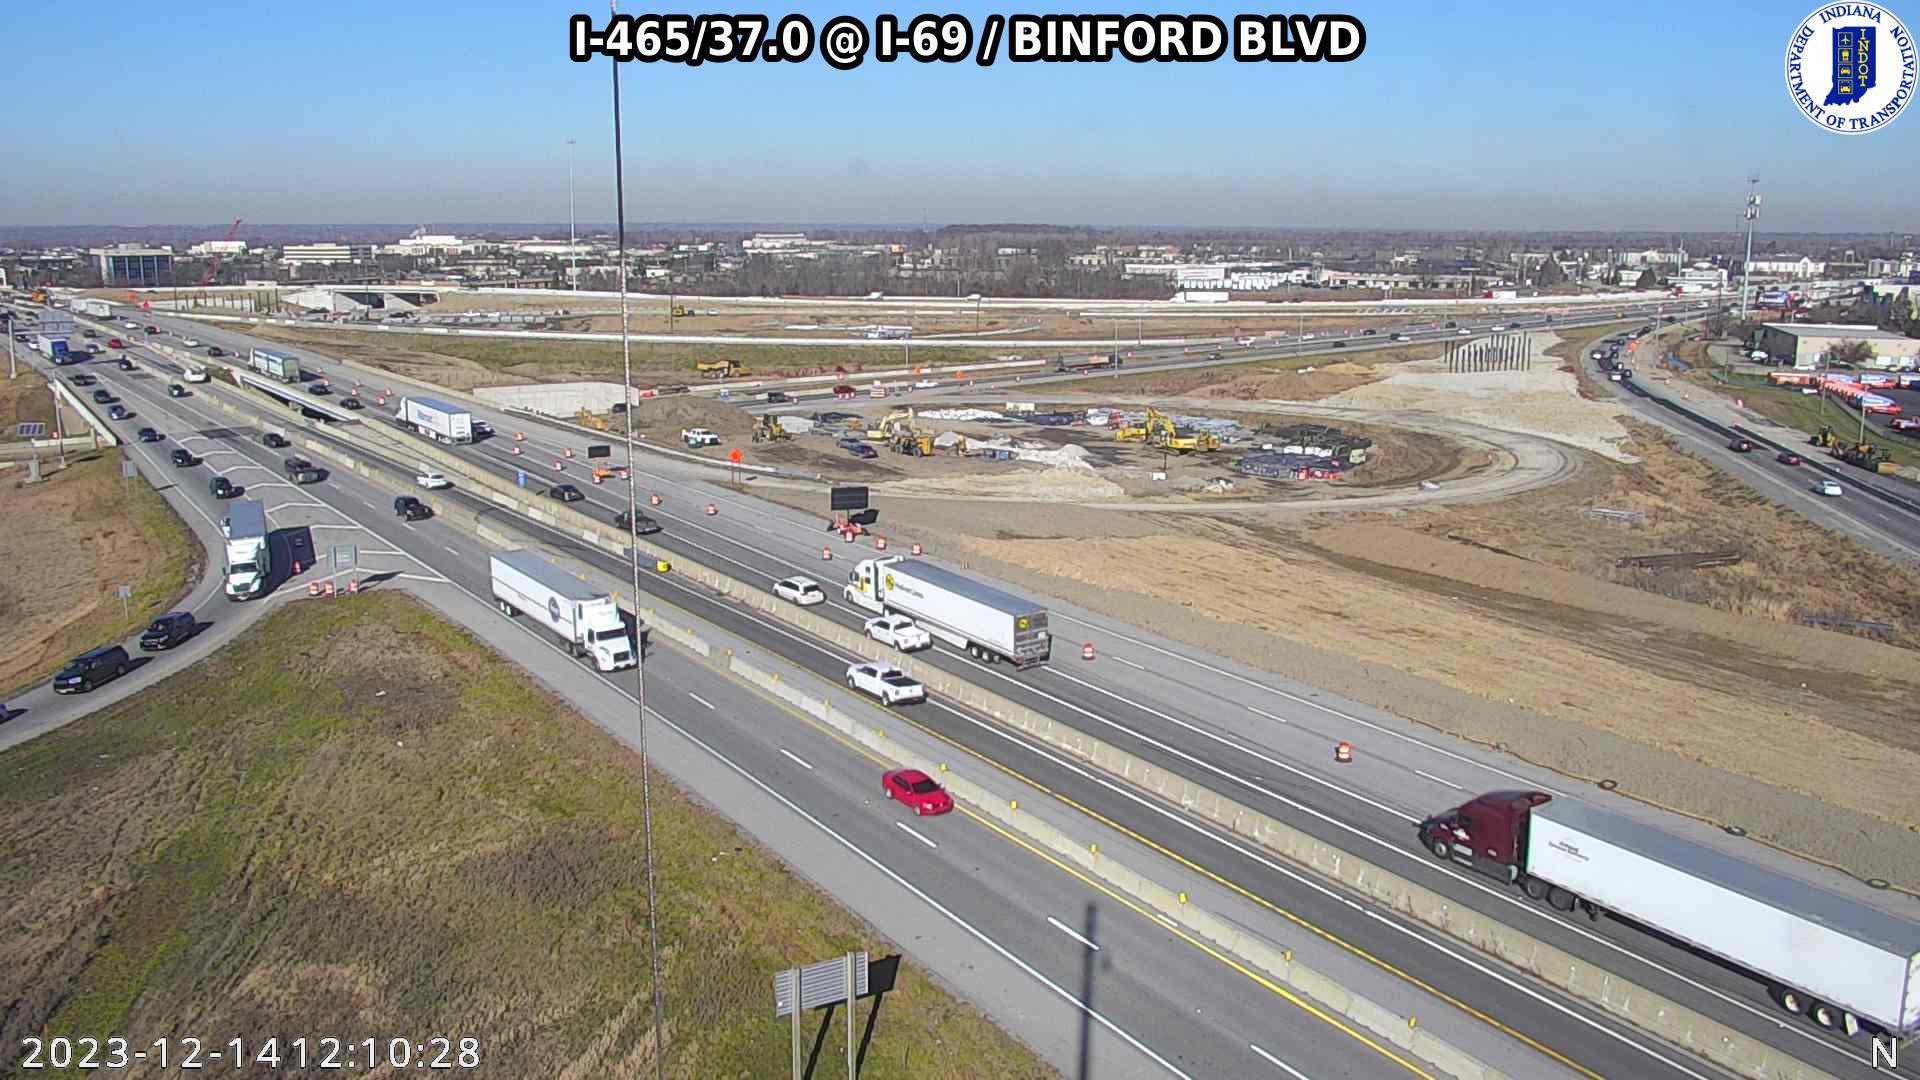 Traffic Cam Indianapolis: I-465: I-465/37.0 I-69/BINFORD BLVD: I-465/37.0 I-69/BINFORD BLVD Player